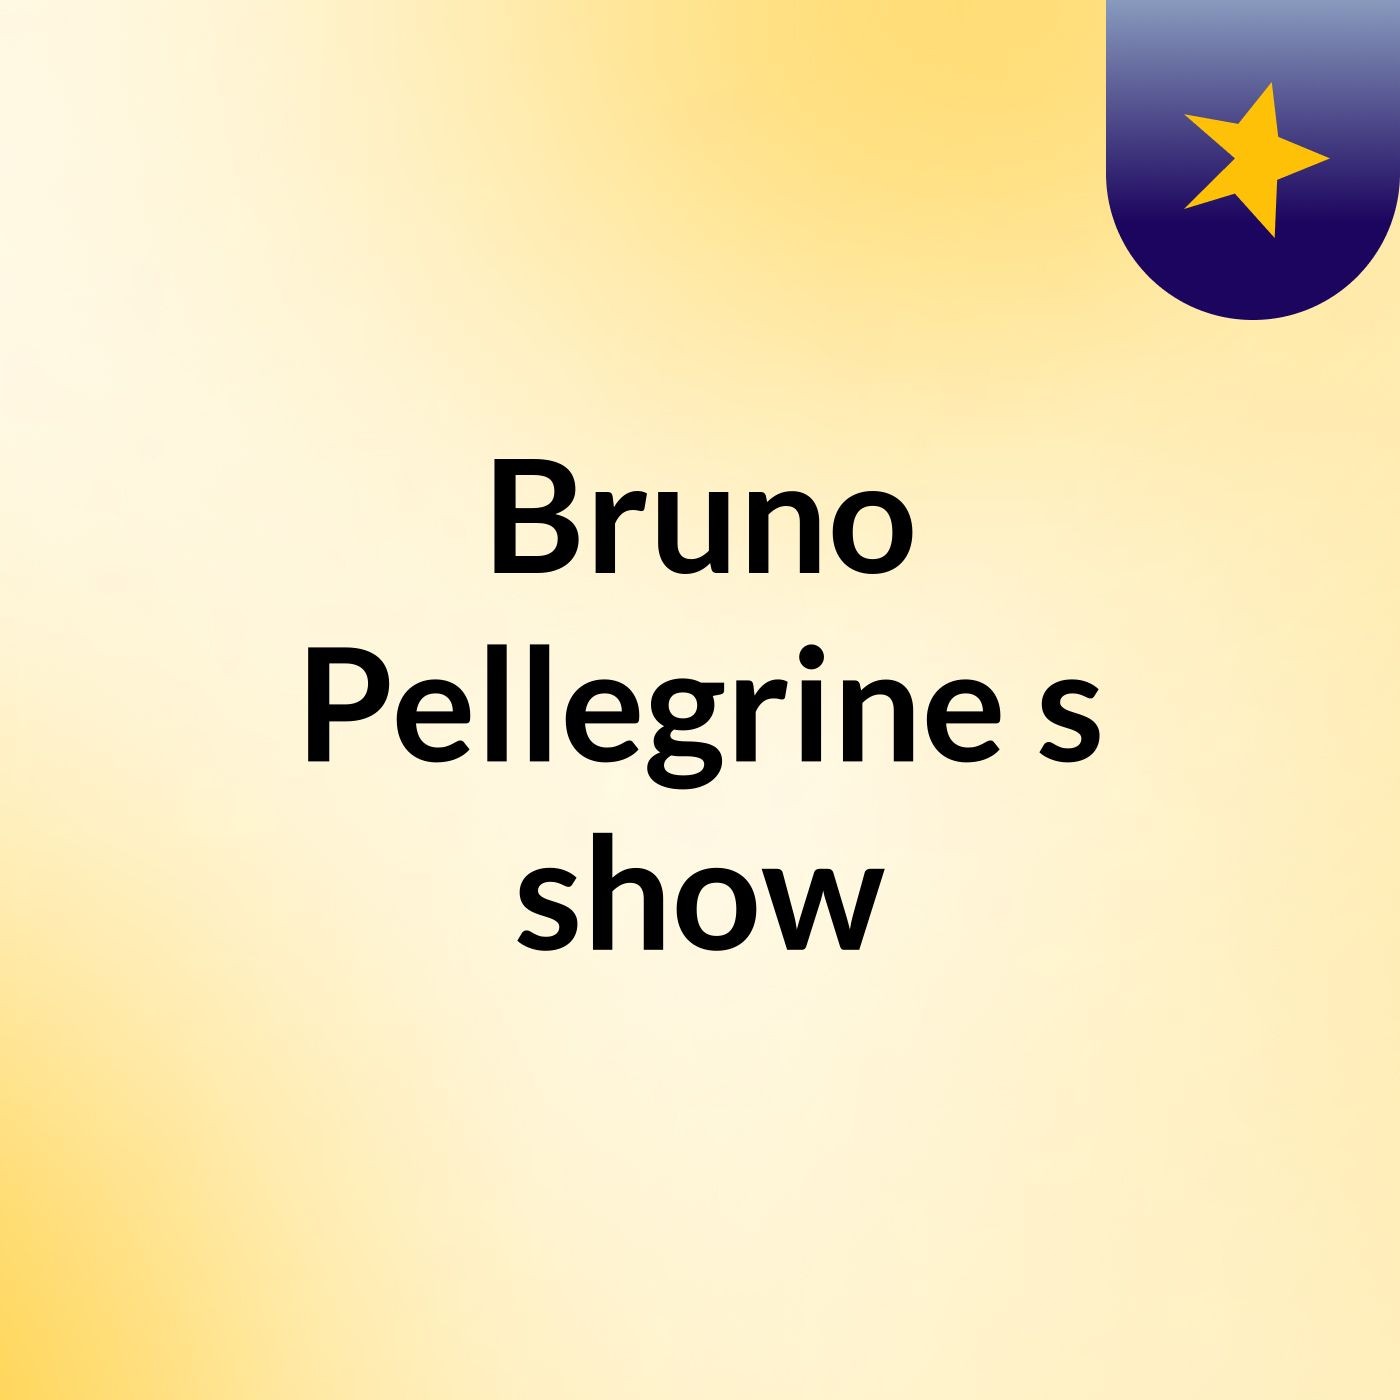 Bruno Pellegrine's show